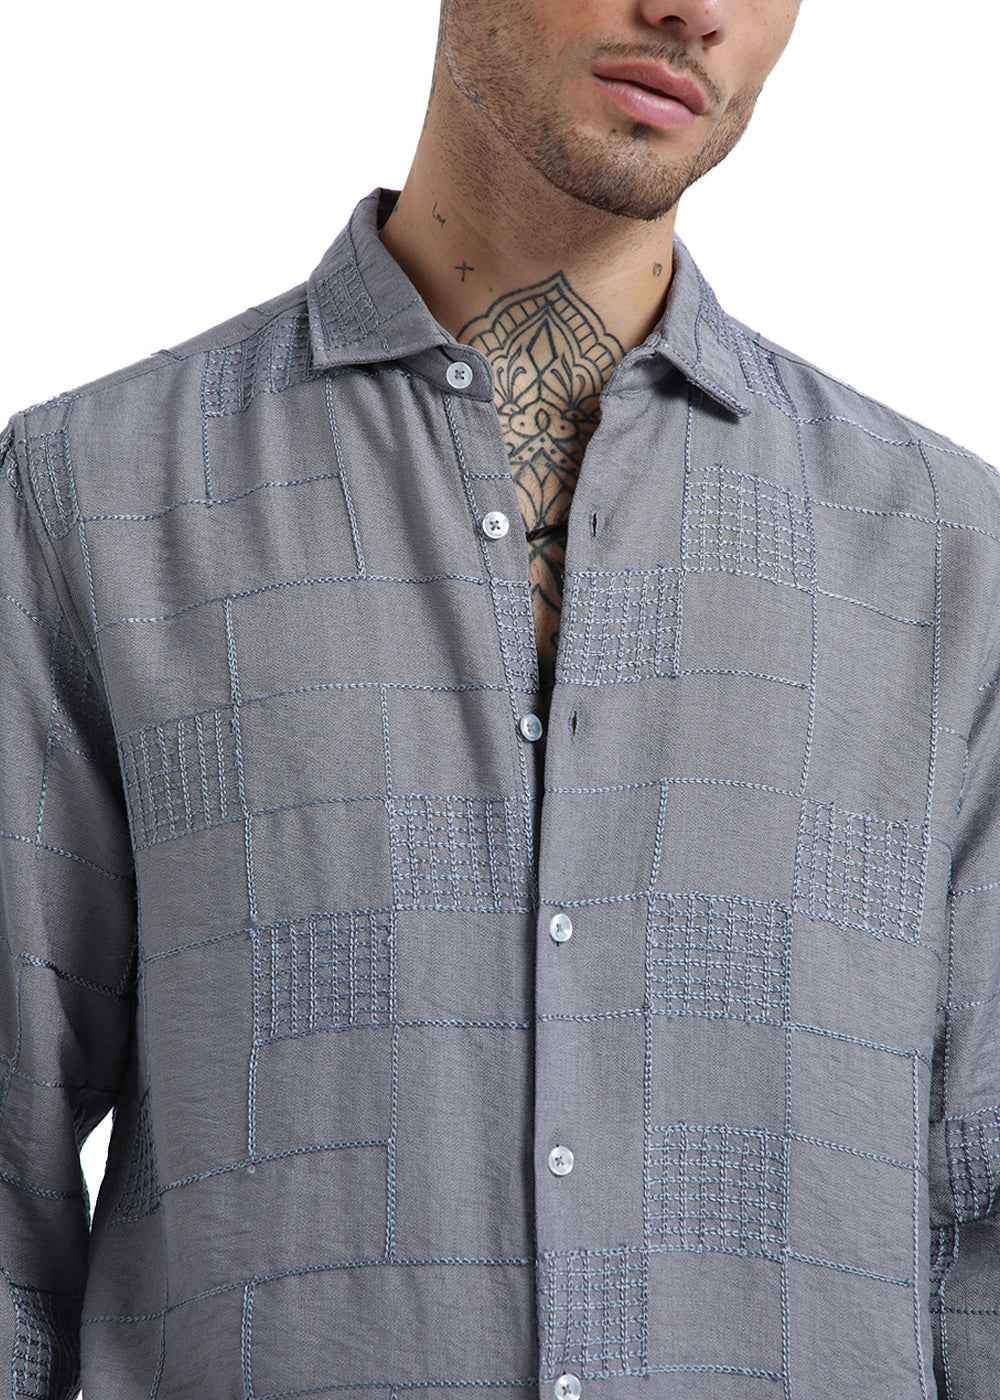 Glisten Grey Plaid Embroidery Shirt